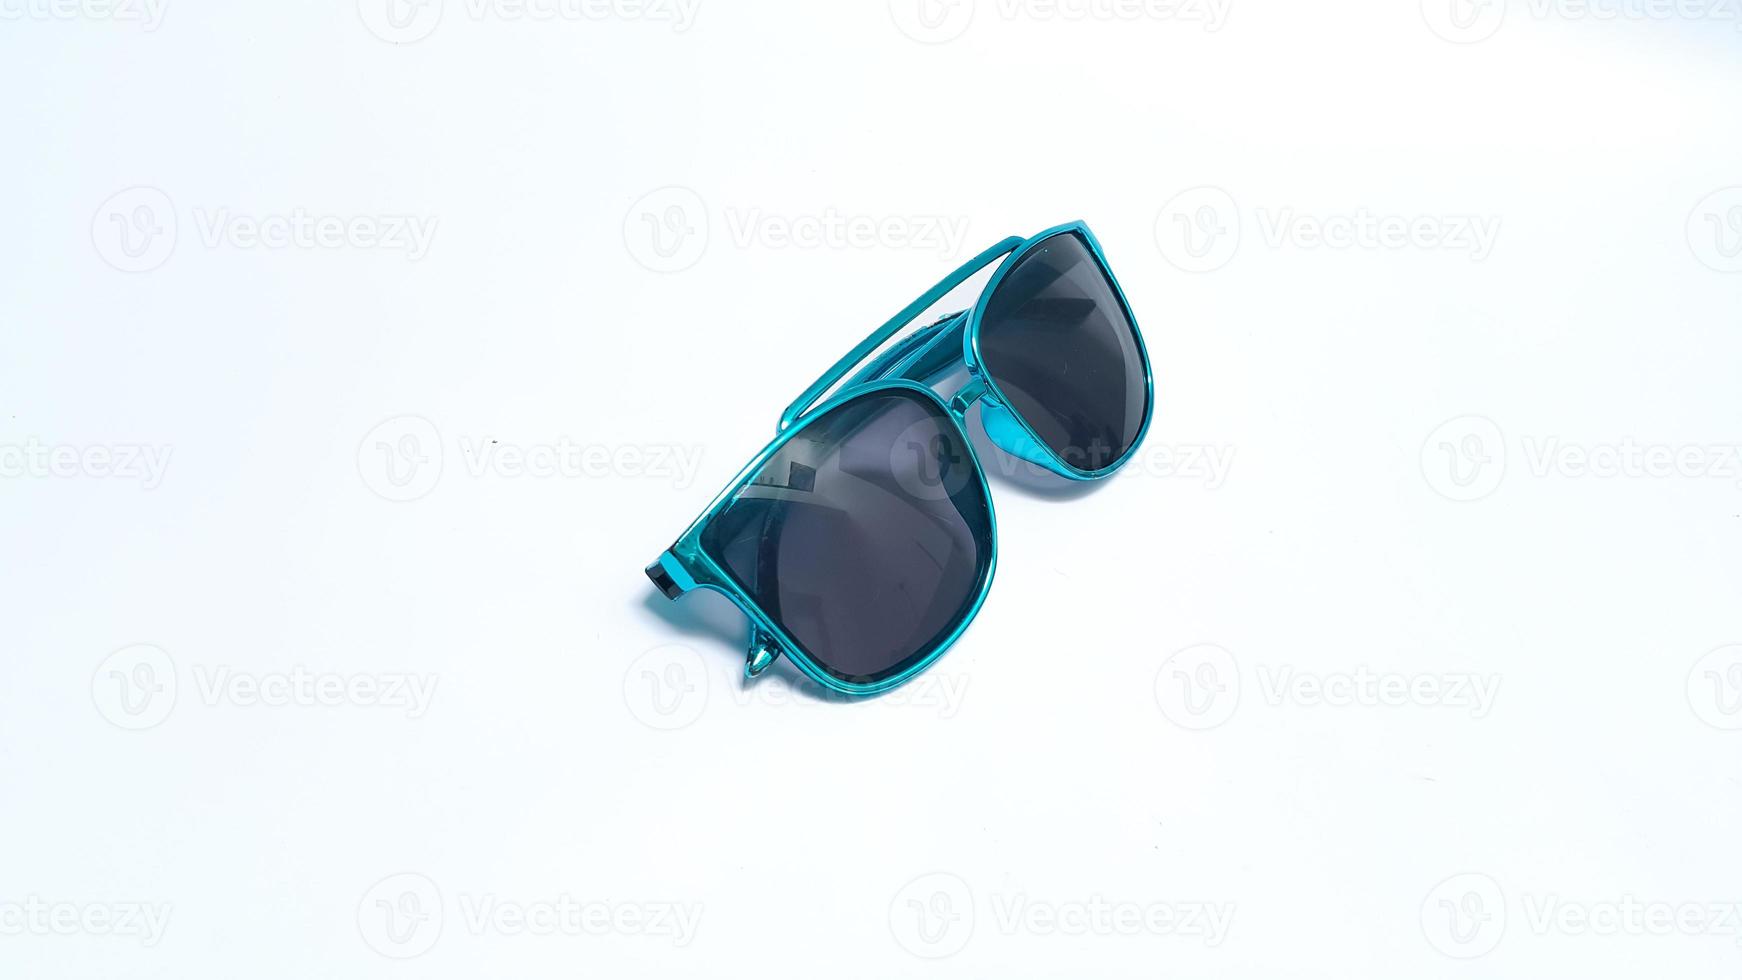 Fashion female sunglasses isolated on white background. Sunglasses with a turquoise frame photo